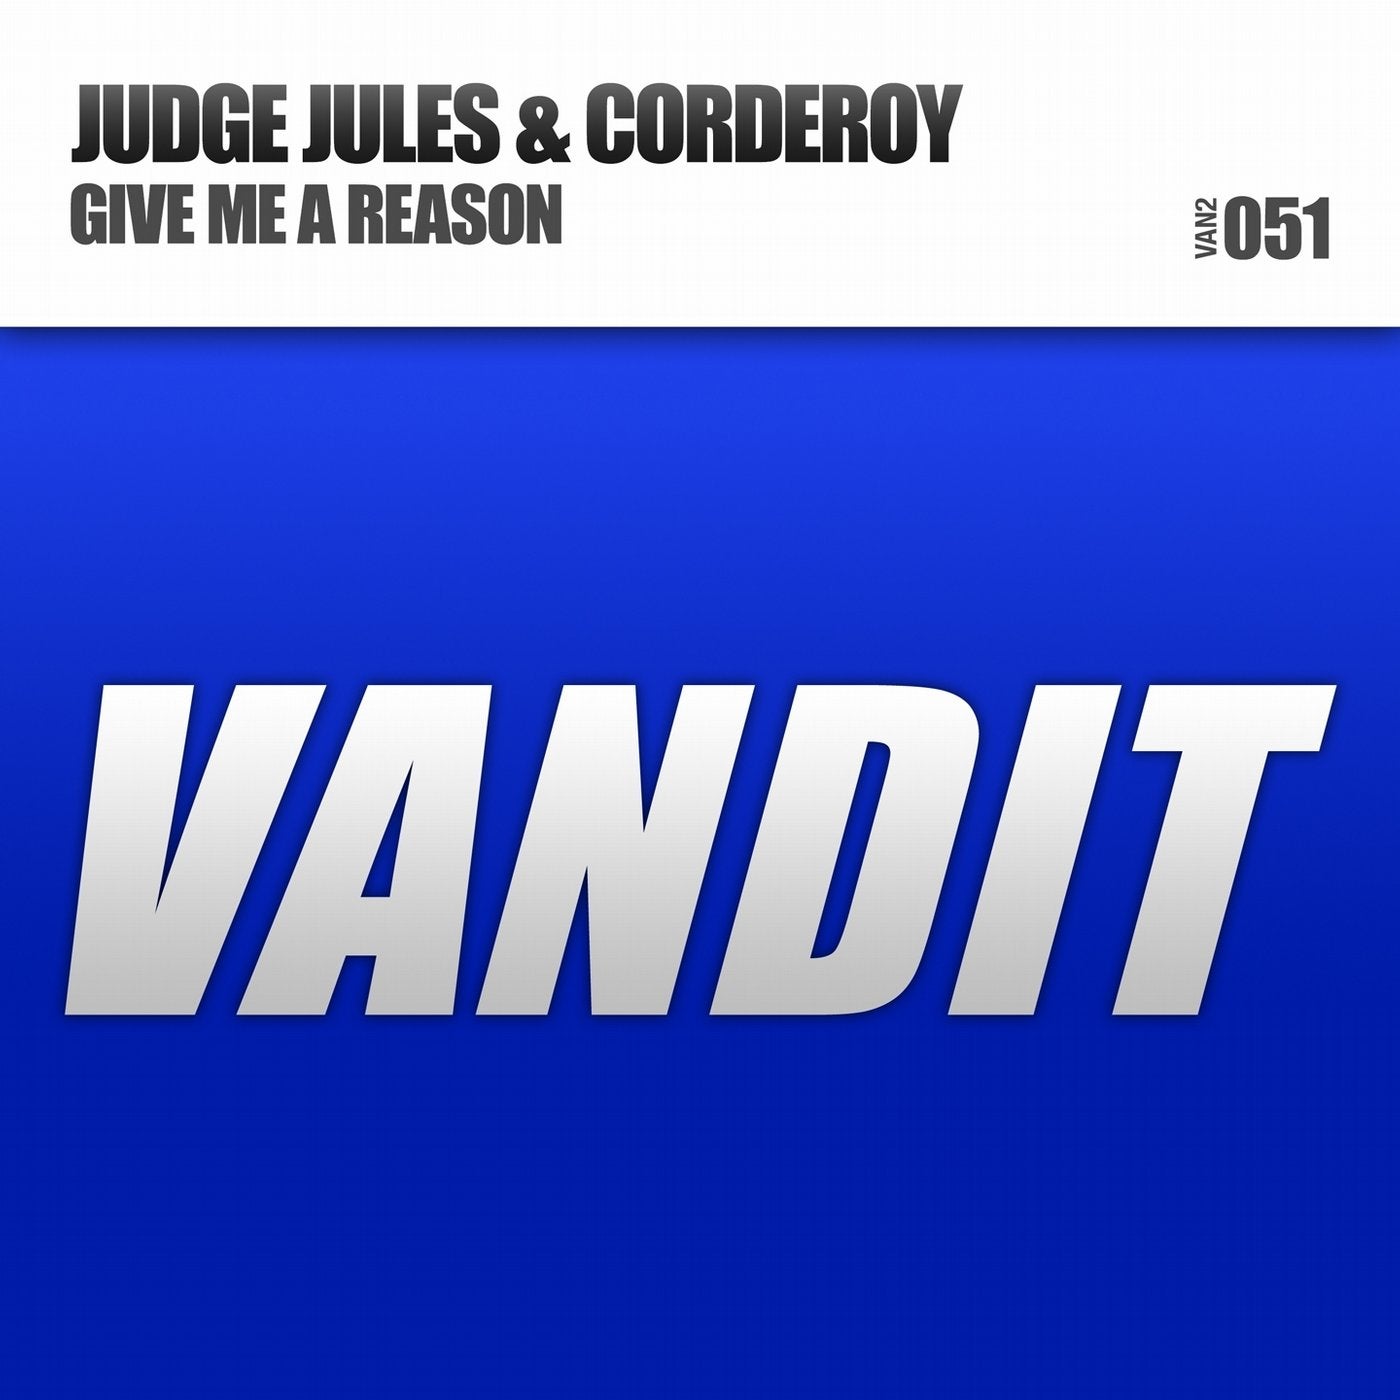 Give Me a Reason (Judge Jules & Corderoy)